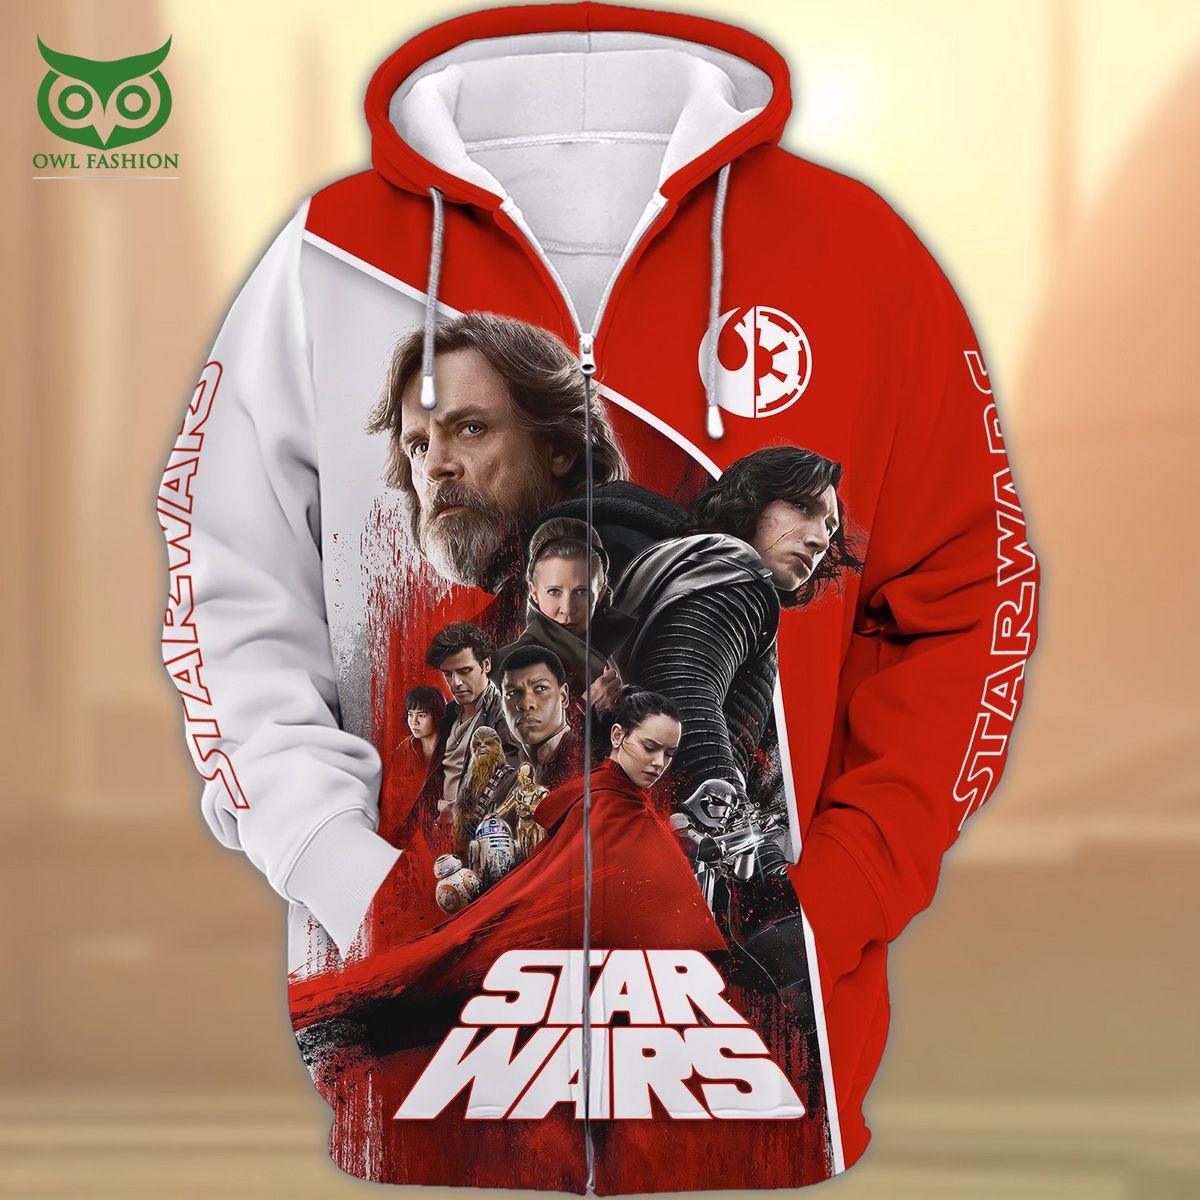 star wars the force awaken 3d tshirt hoodie polo 1 GxRhs